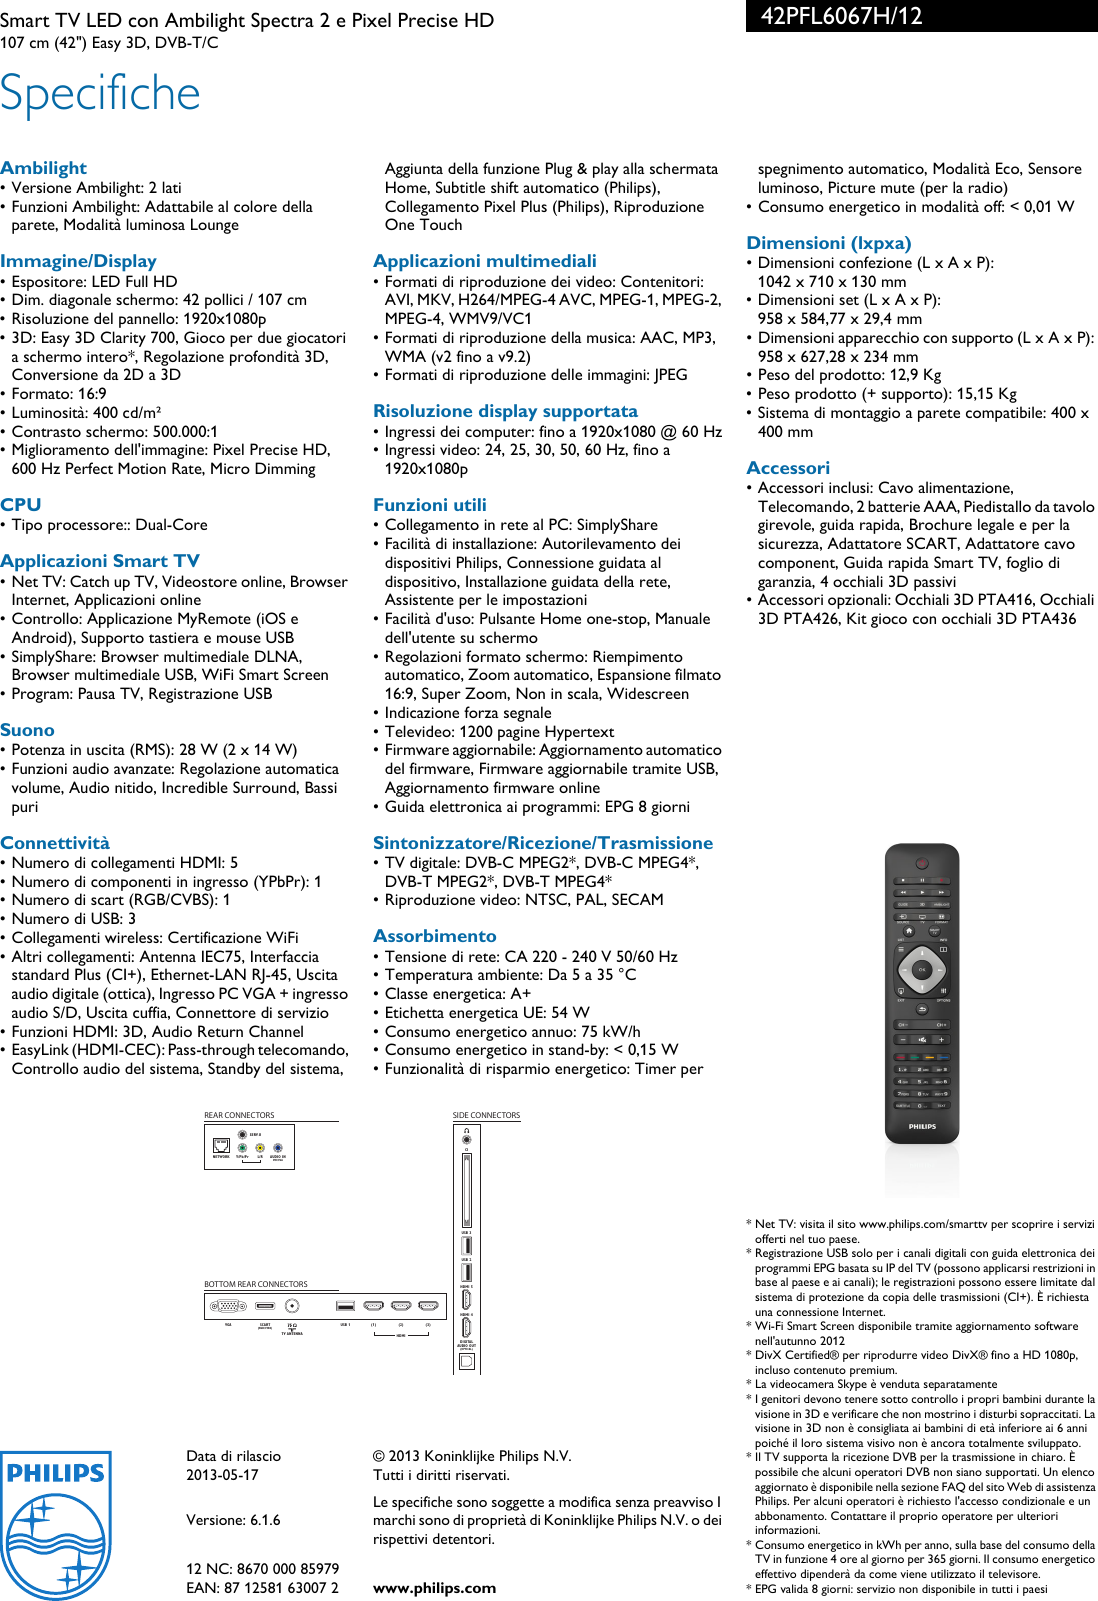 Page 3 of 3 - Philips 42PFL6067H/12 Smart TV LED Con Ambilight Spectra 2 E Pixel Precise HD User Manual Scheda Tecnica 42pfl6067h 12 Pss Itait